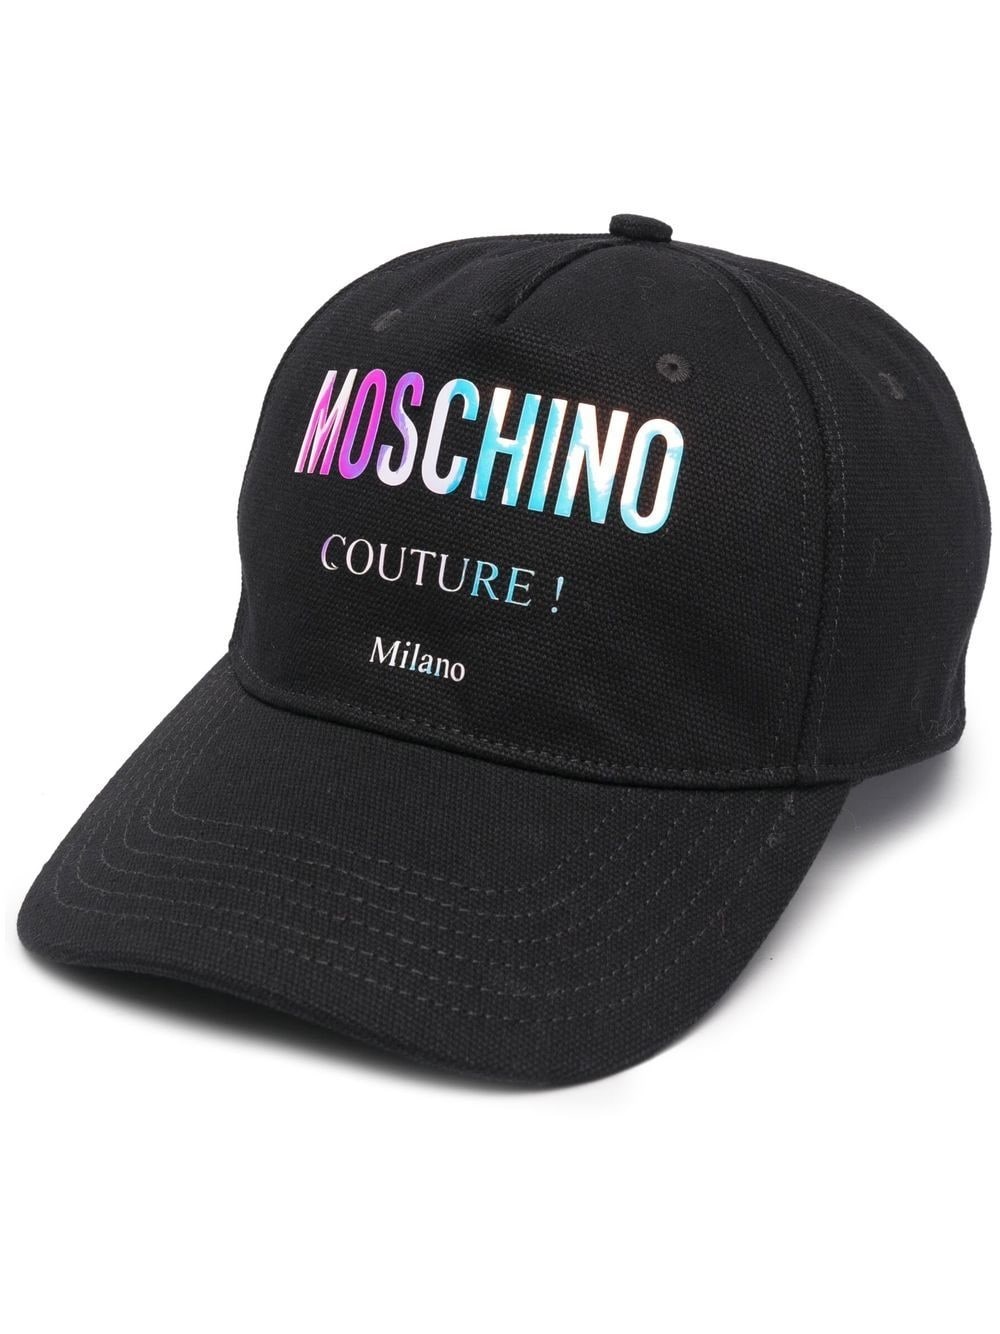 MOSCHINO BASEBALL CAP WITH PRINT